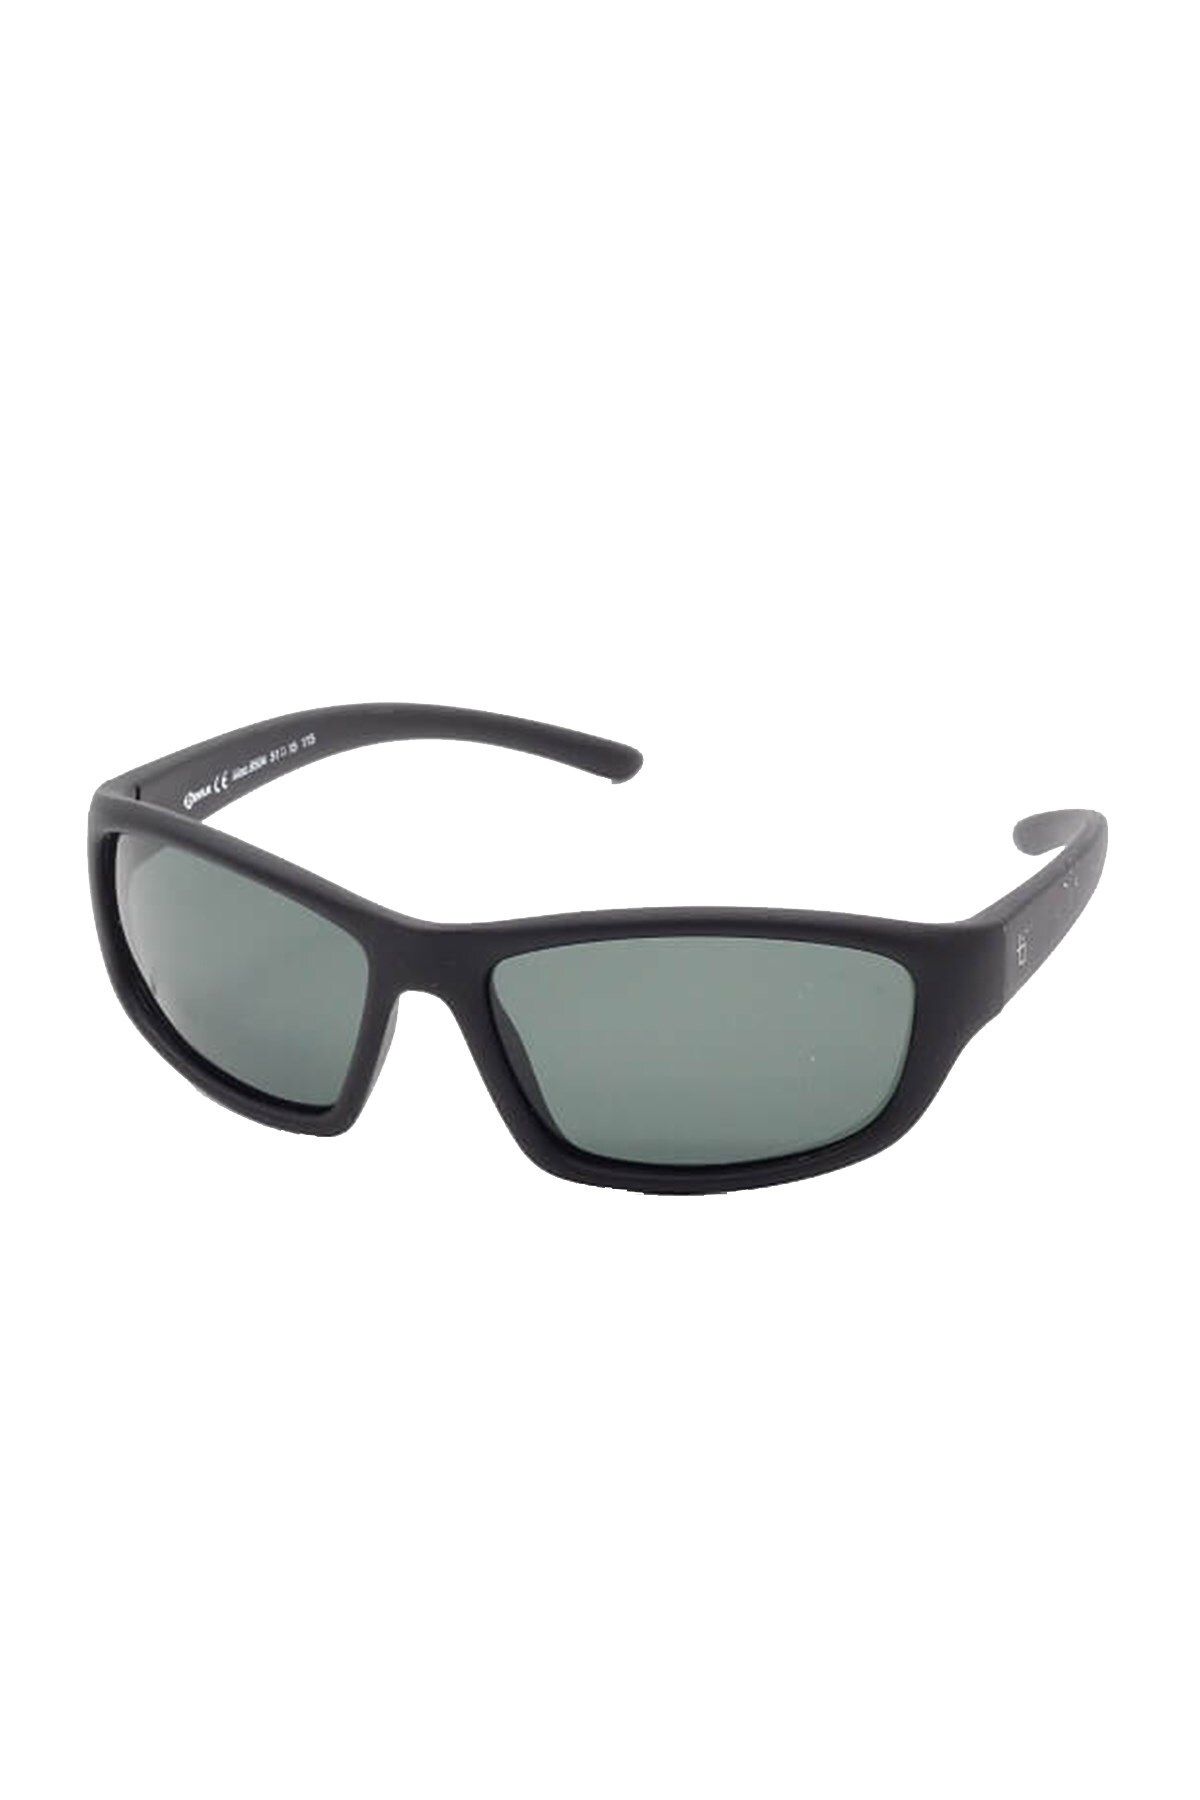 Benx Sunglasses Benx Bxs 9504-m06 Çocuk Güneş Gözlüğü